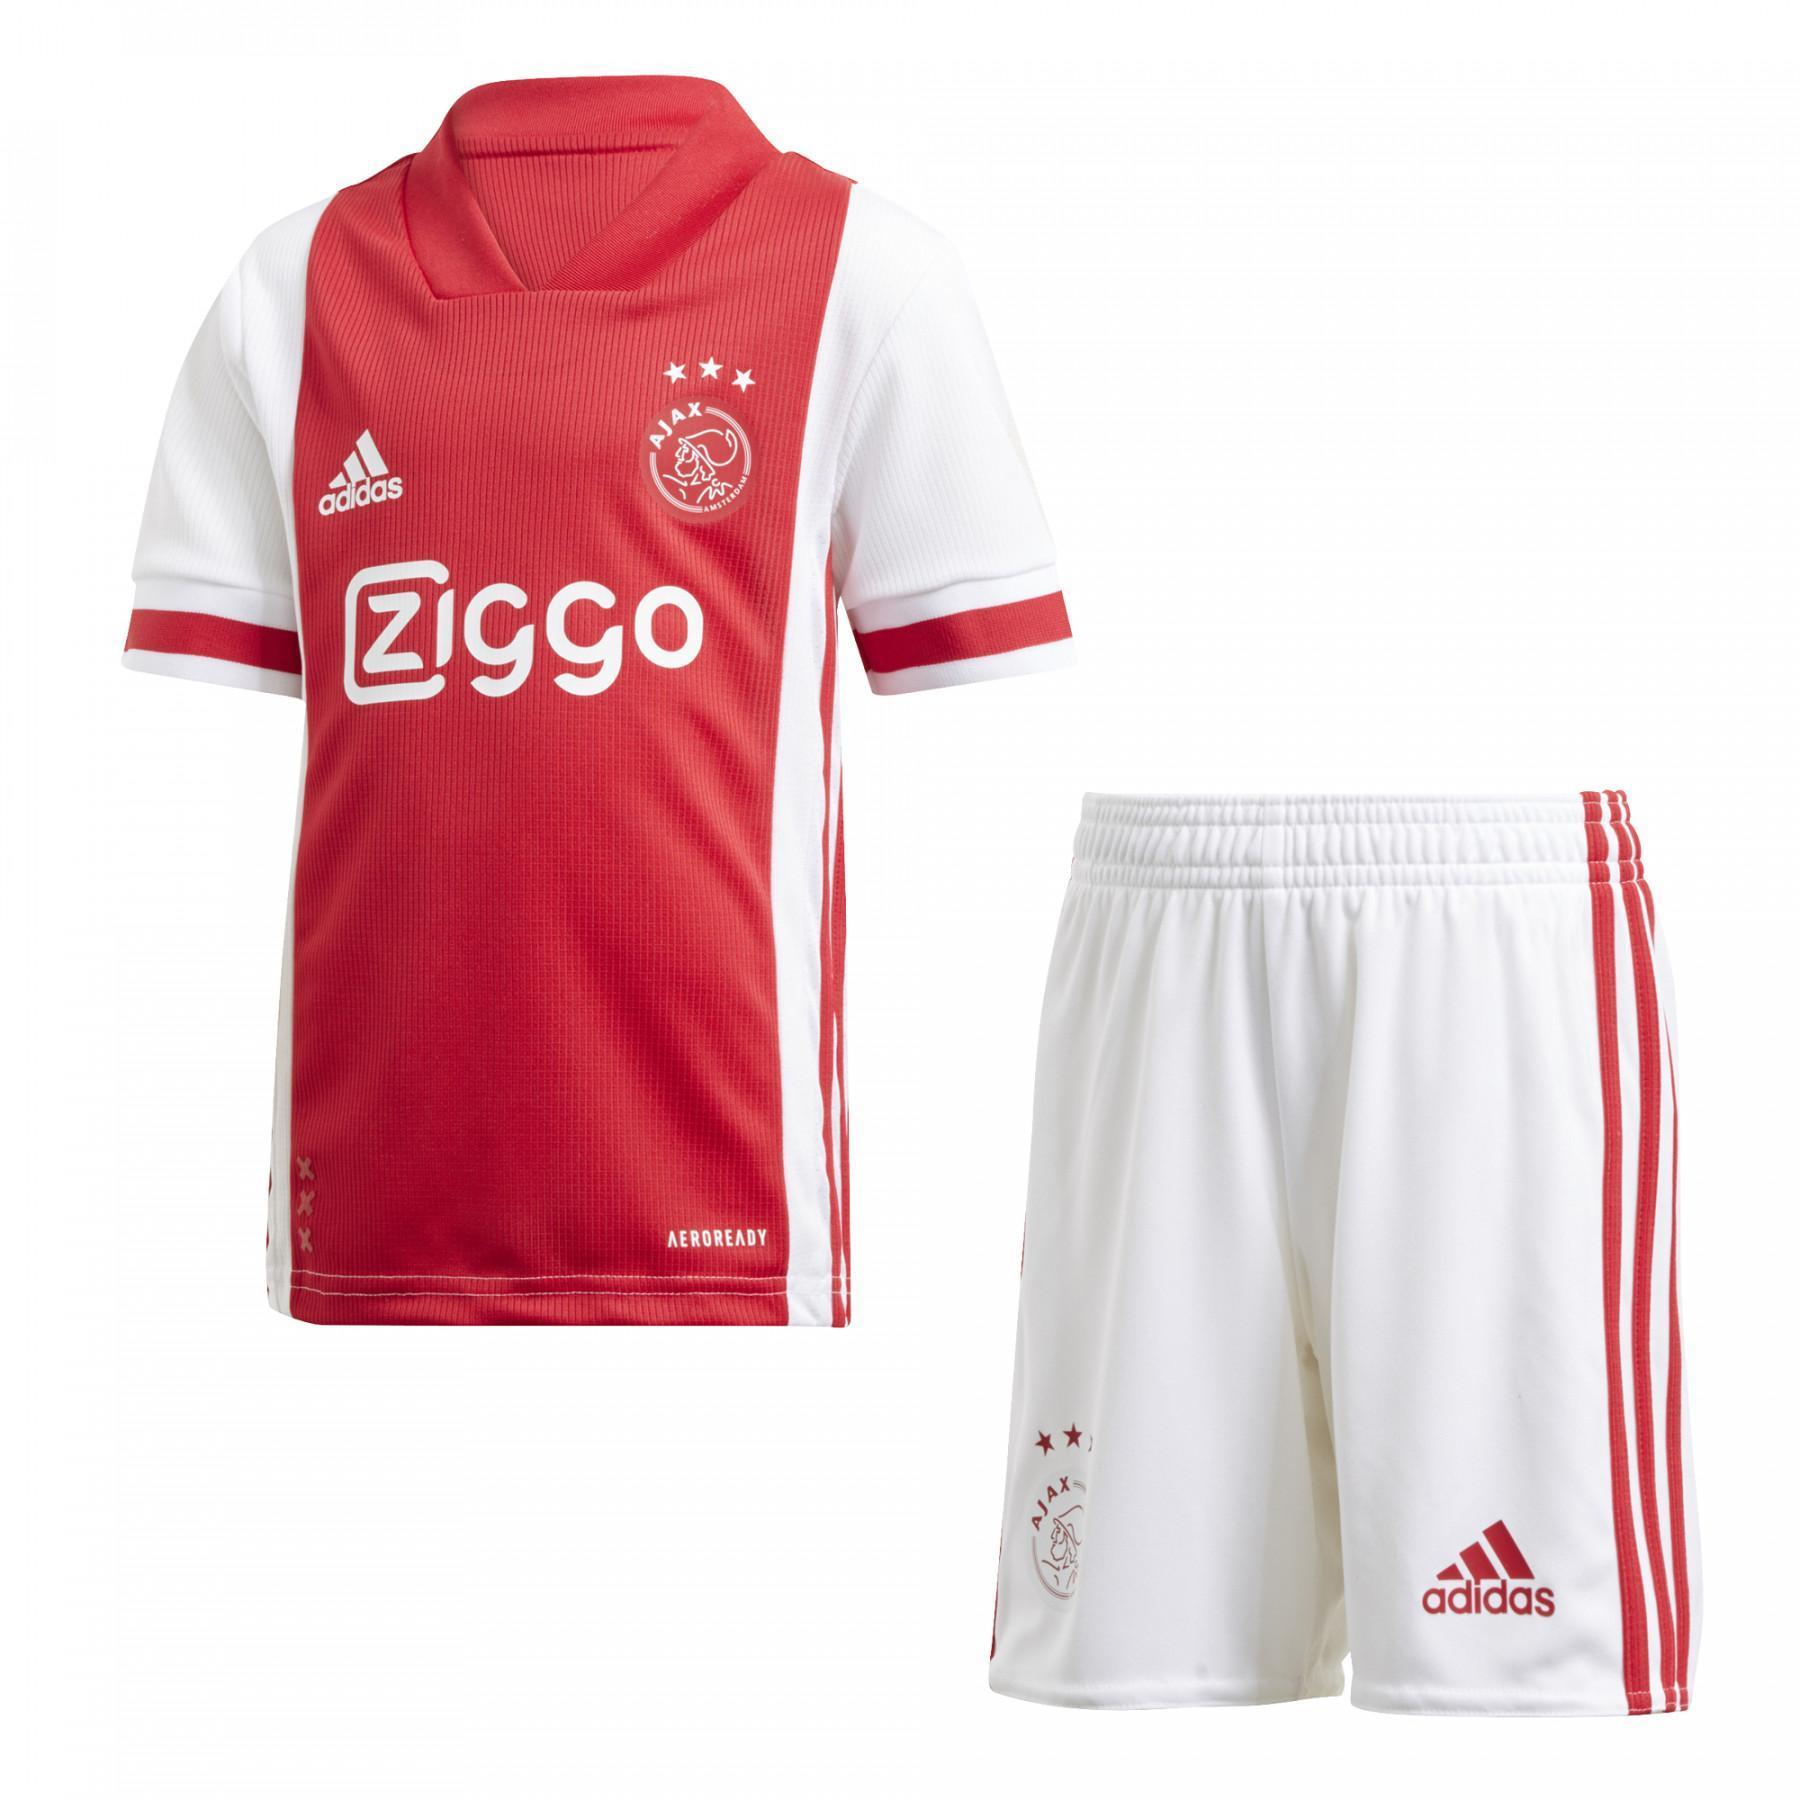 Mini-kit para niños en casa Ajax Amsterdam 2020/21